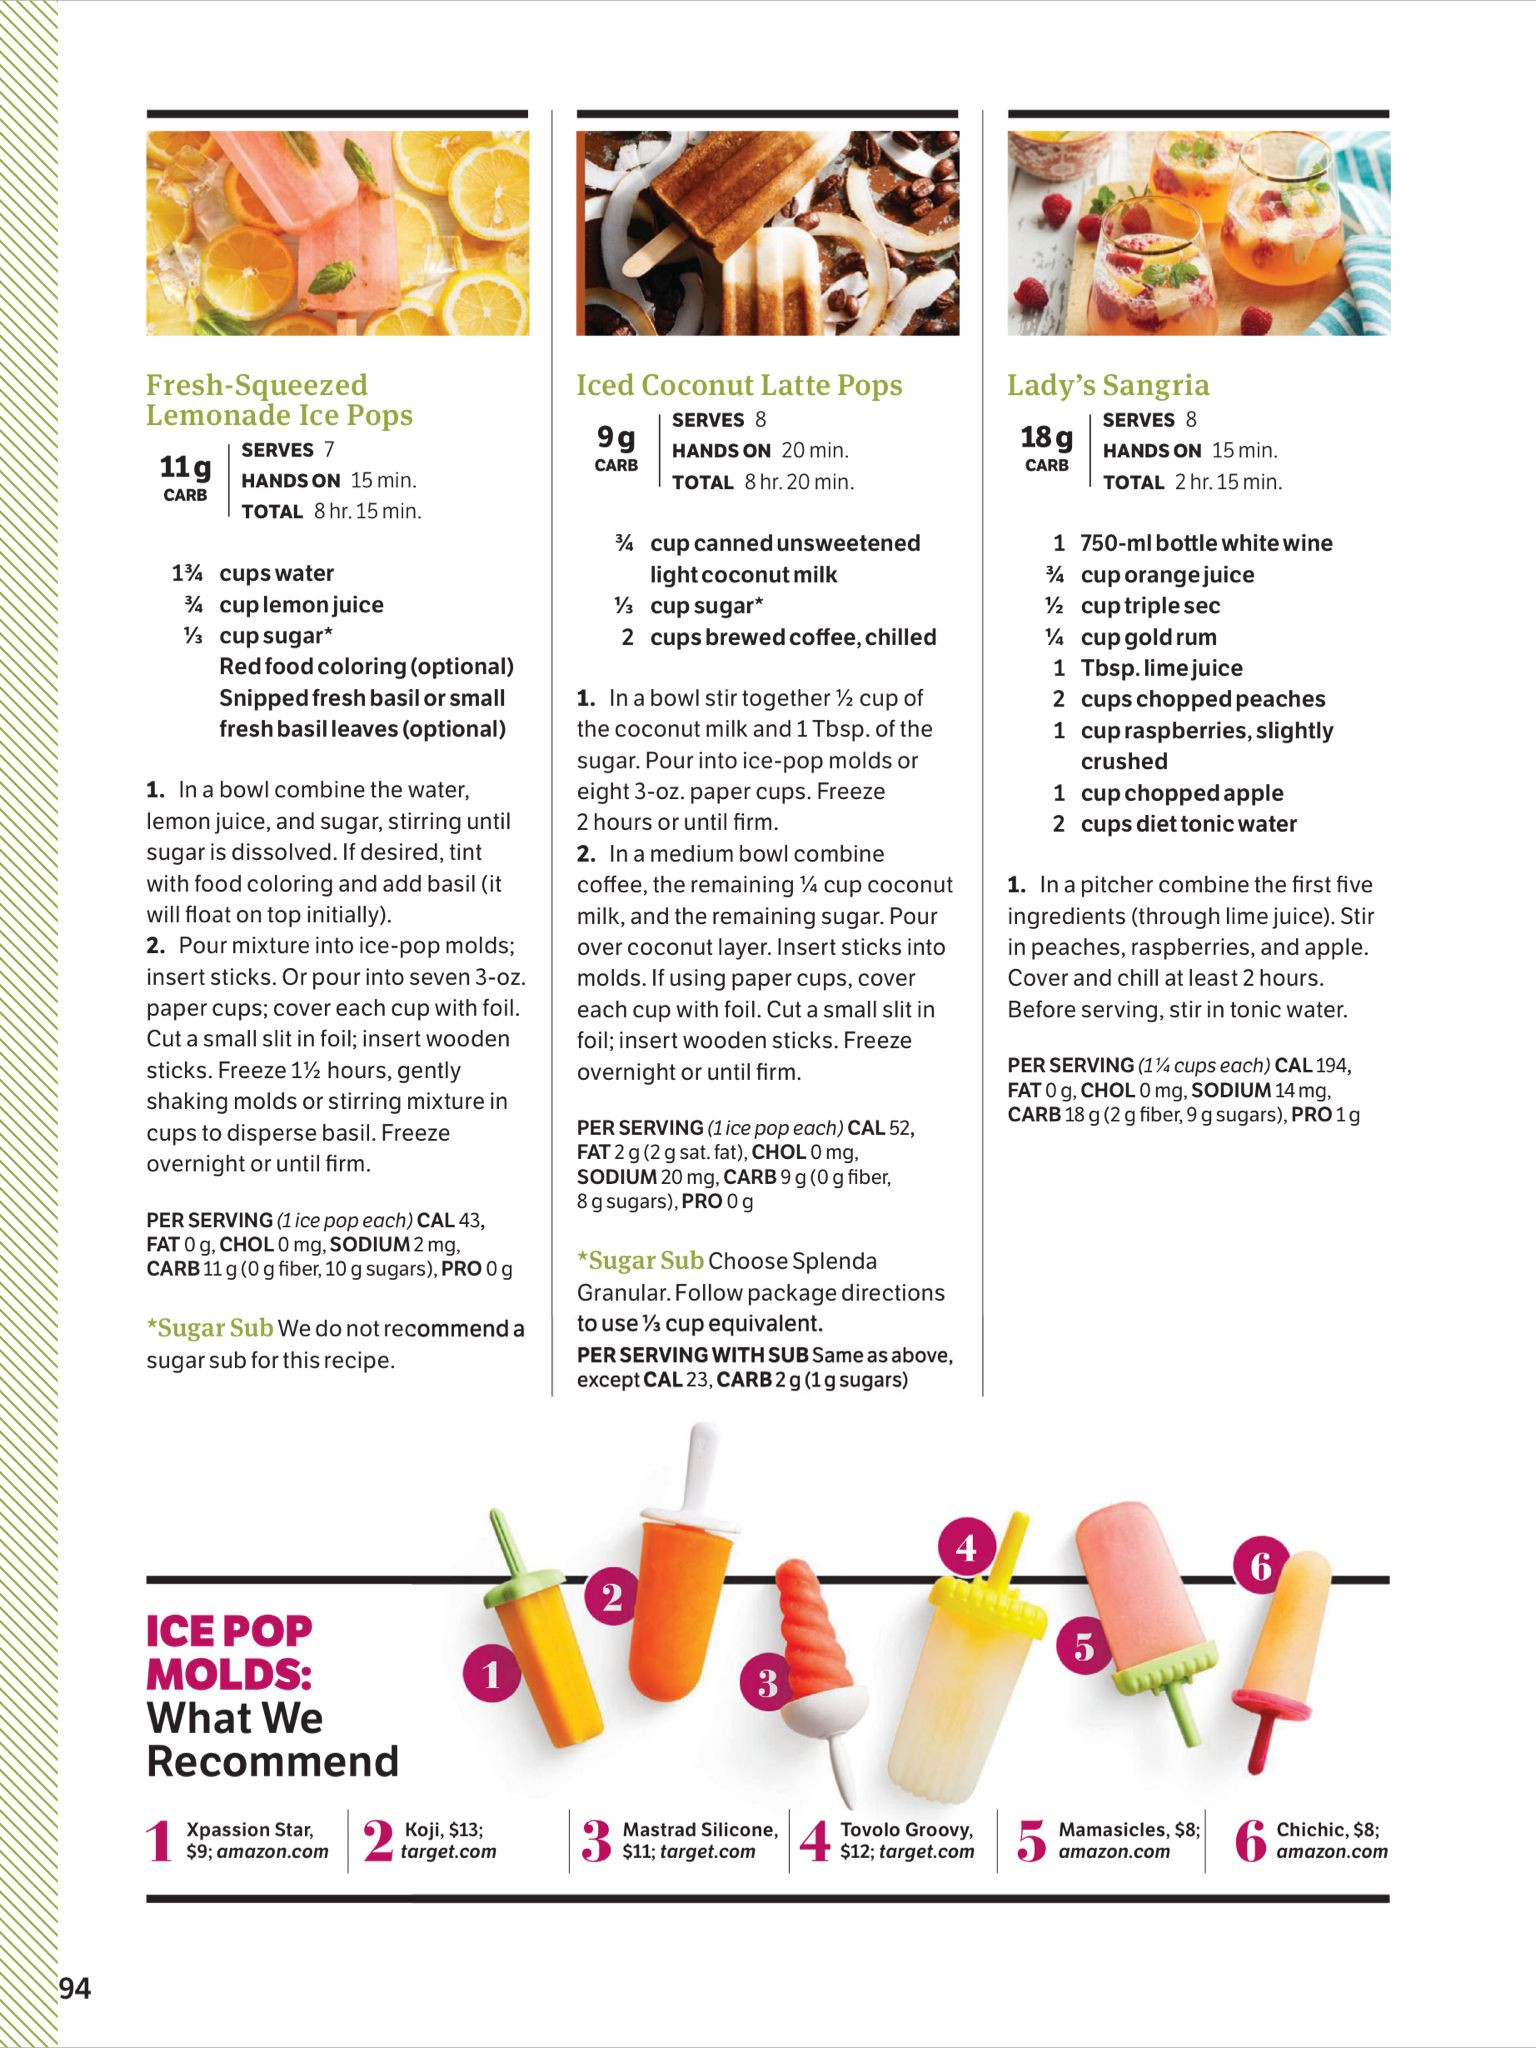 Diabetic Living Magazine Recipes
 "Diabetic Living Summer Recipes" from Diabetic Living